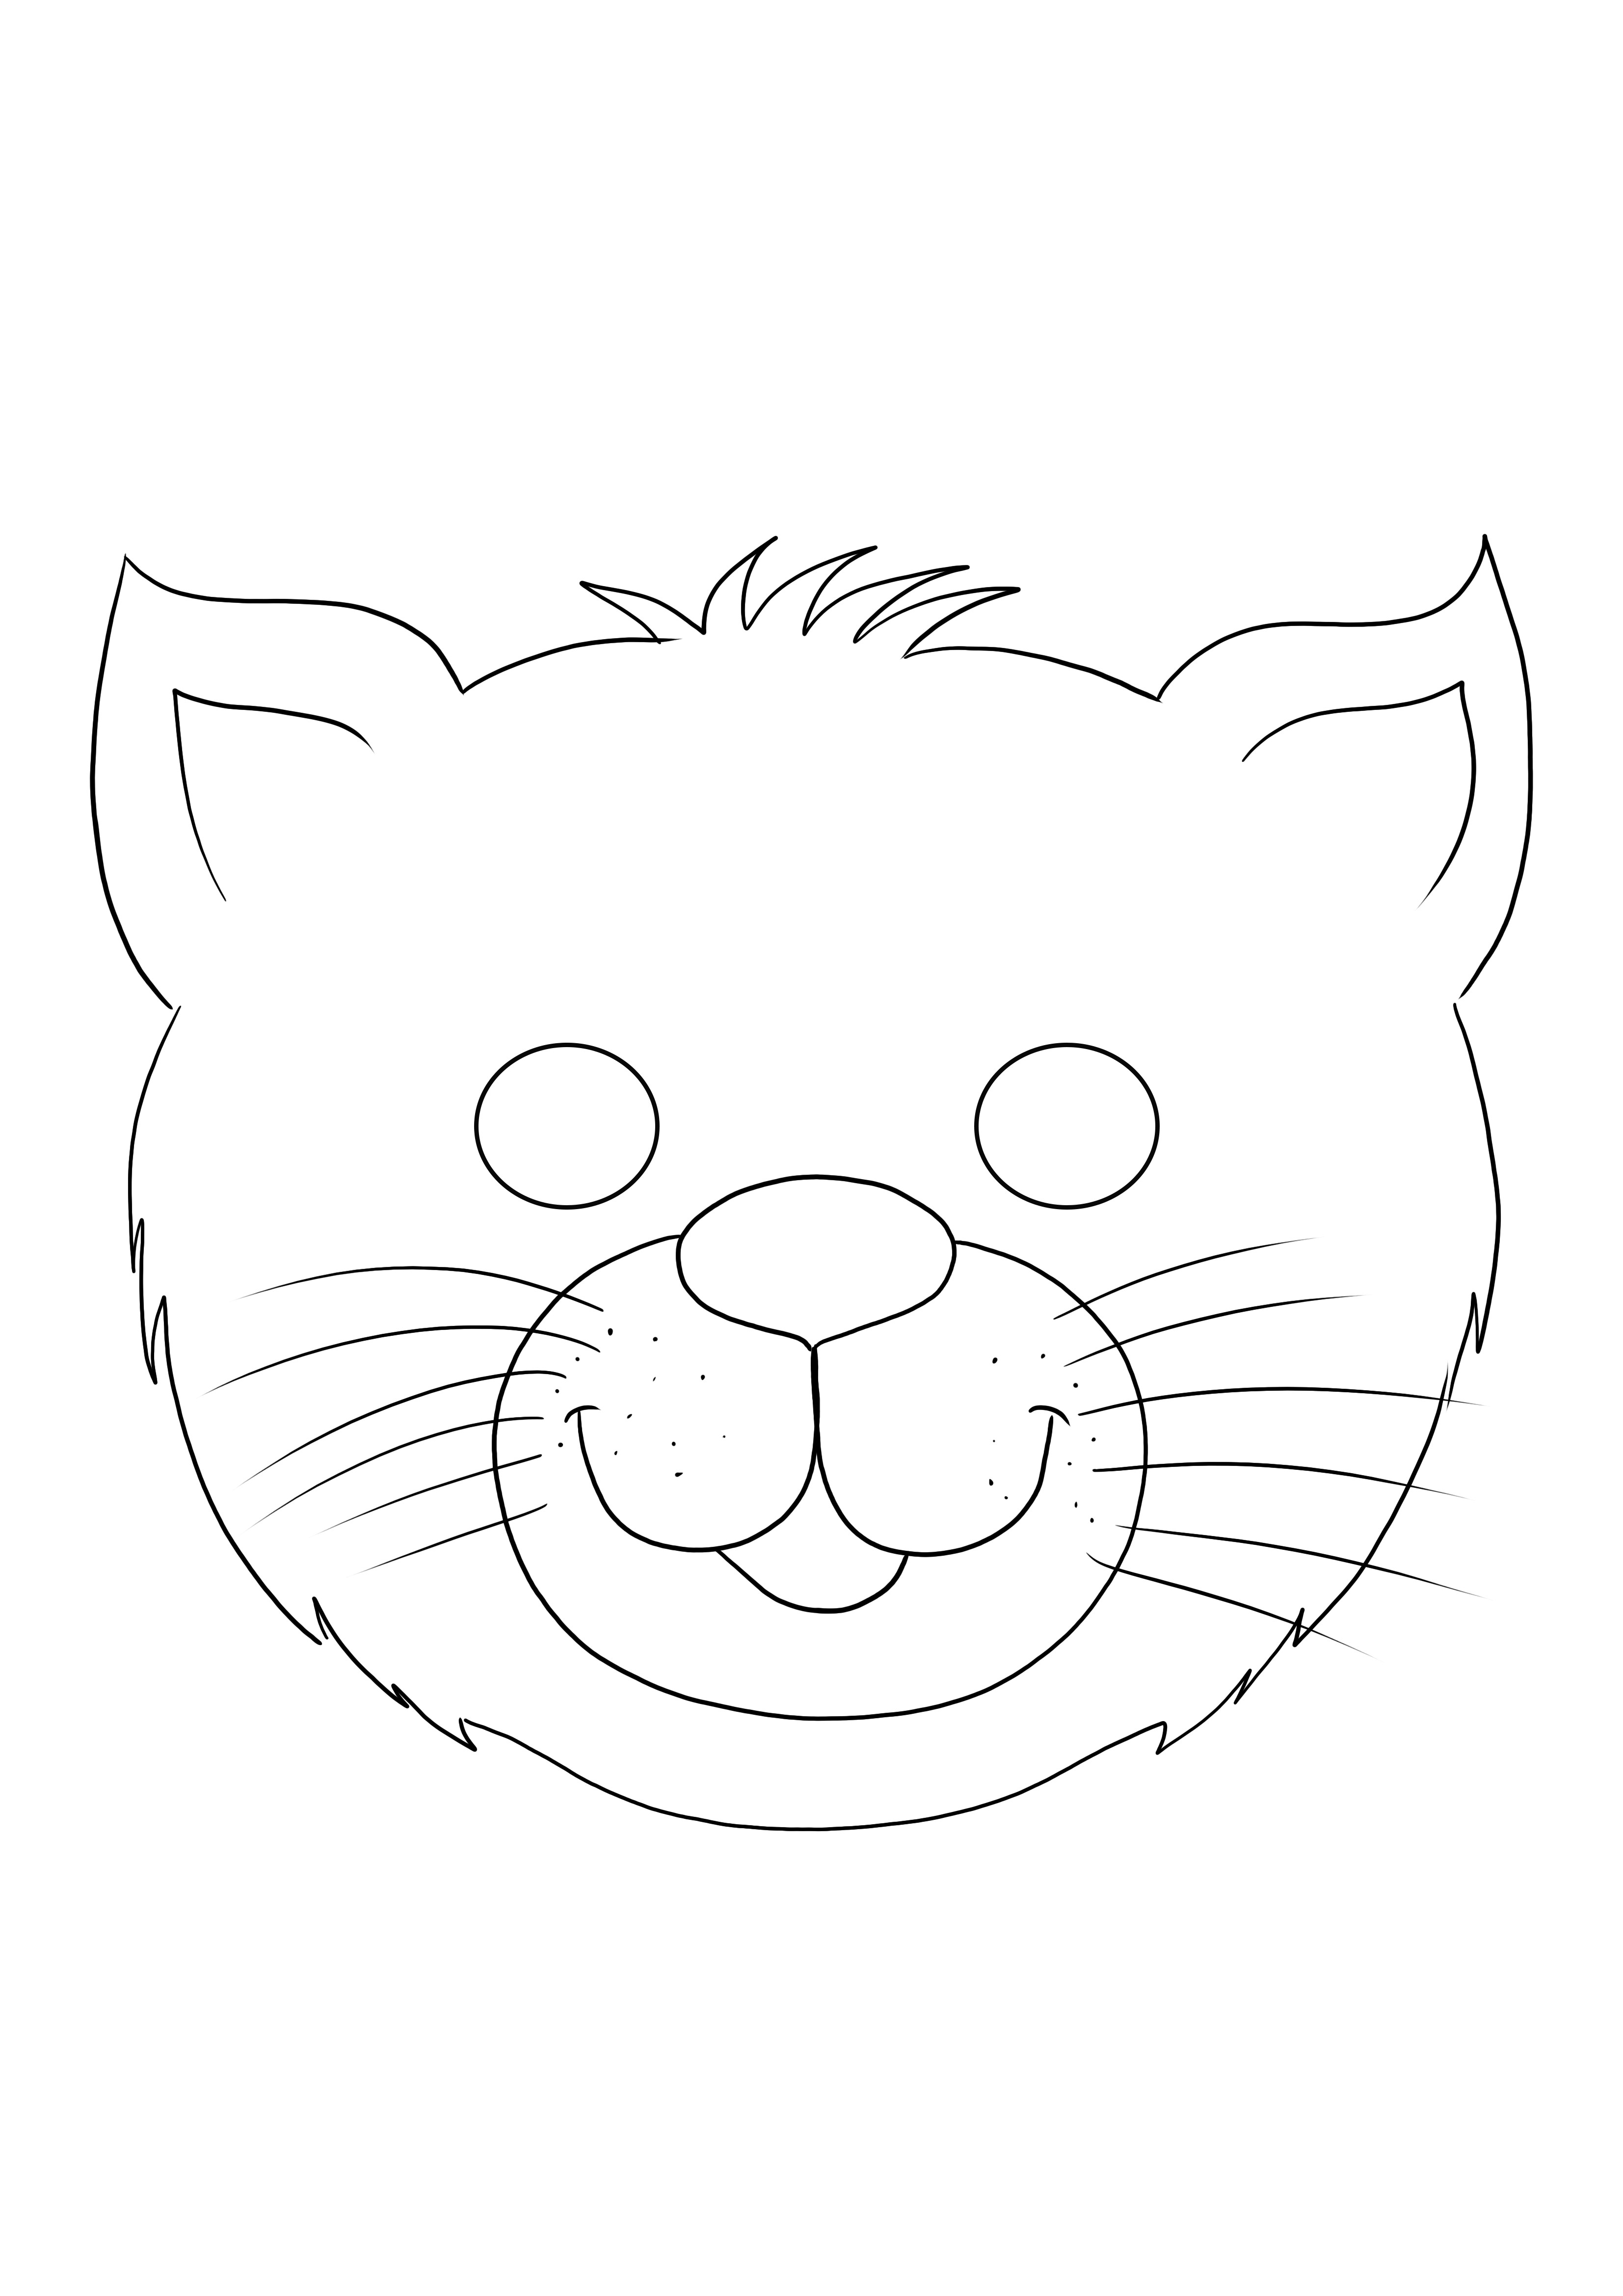 Máscara de gato engraçada grátis para imprimir e colorir e usar para a temporada de festas